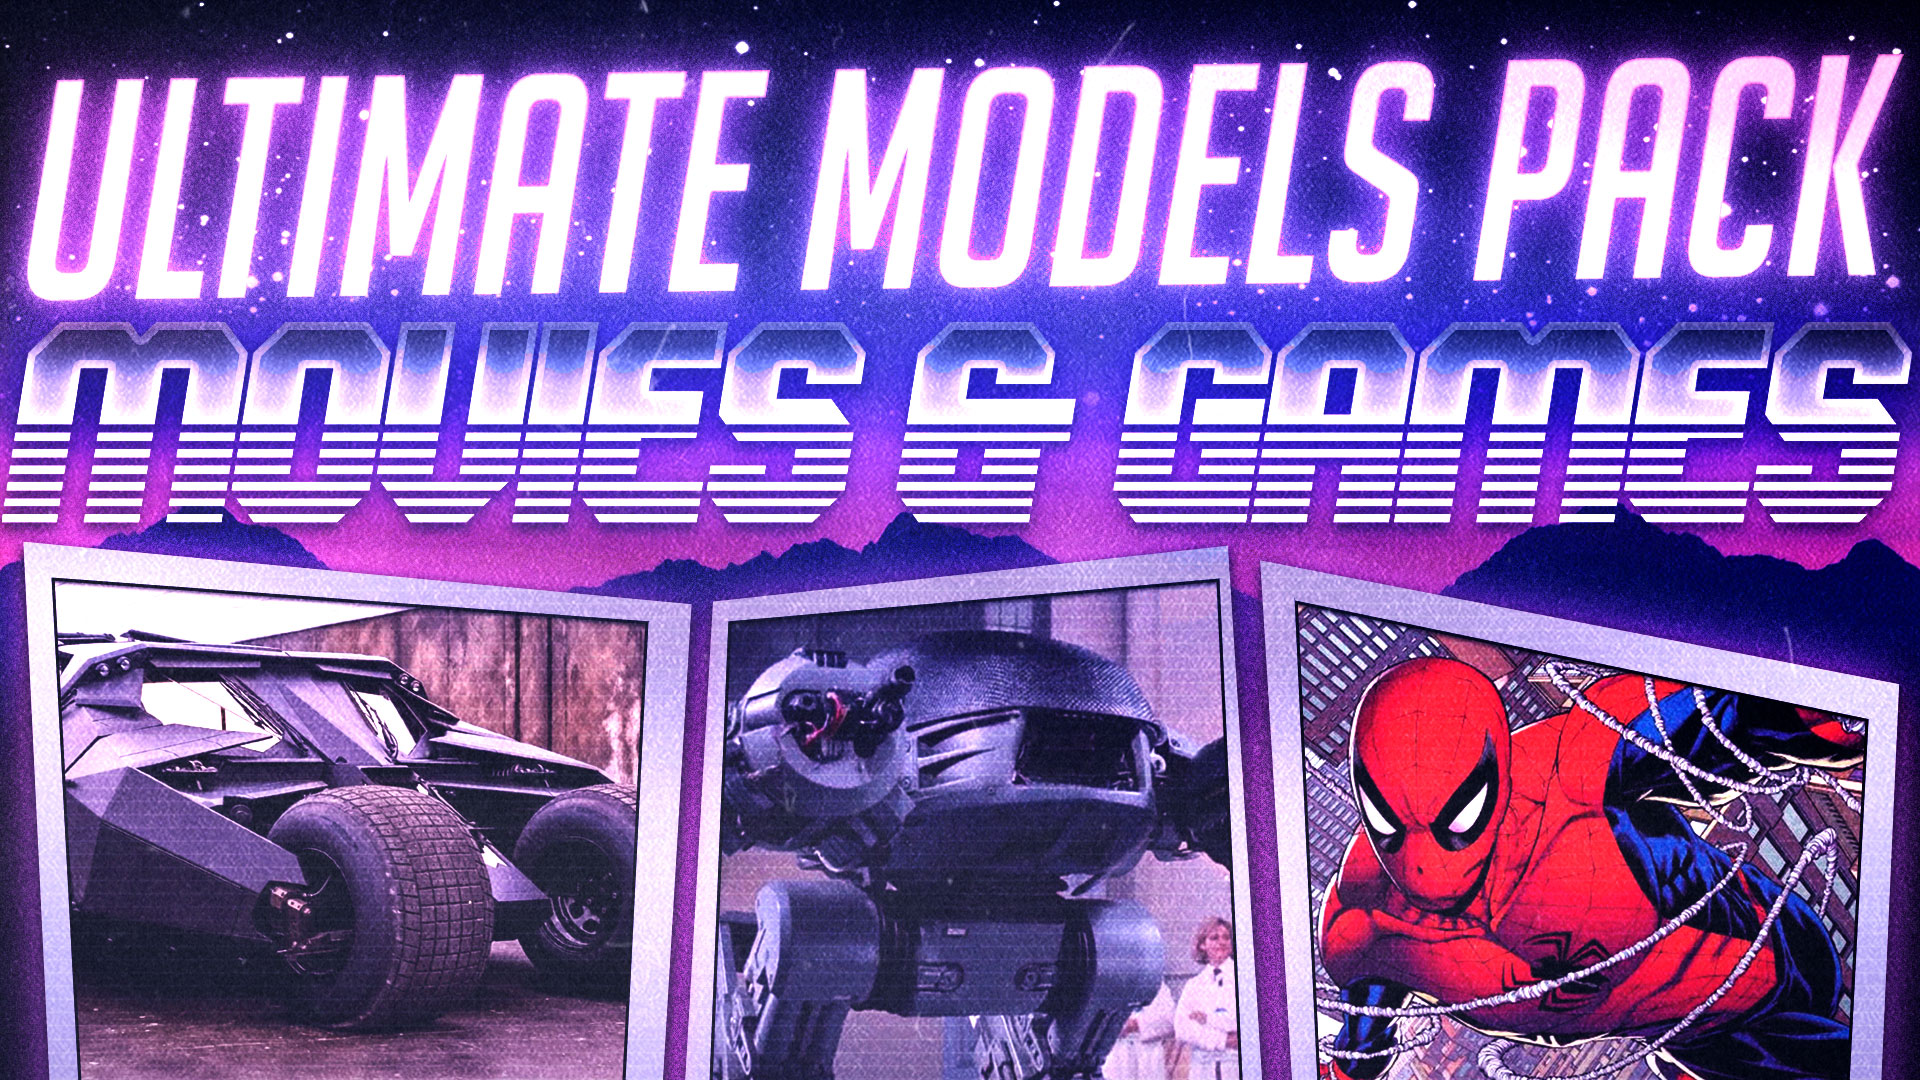 Movies and Gaming | Models Pack